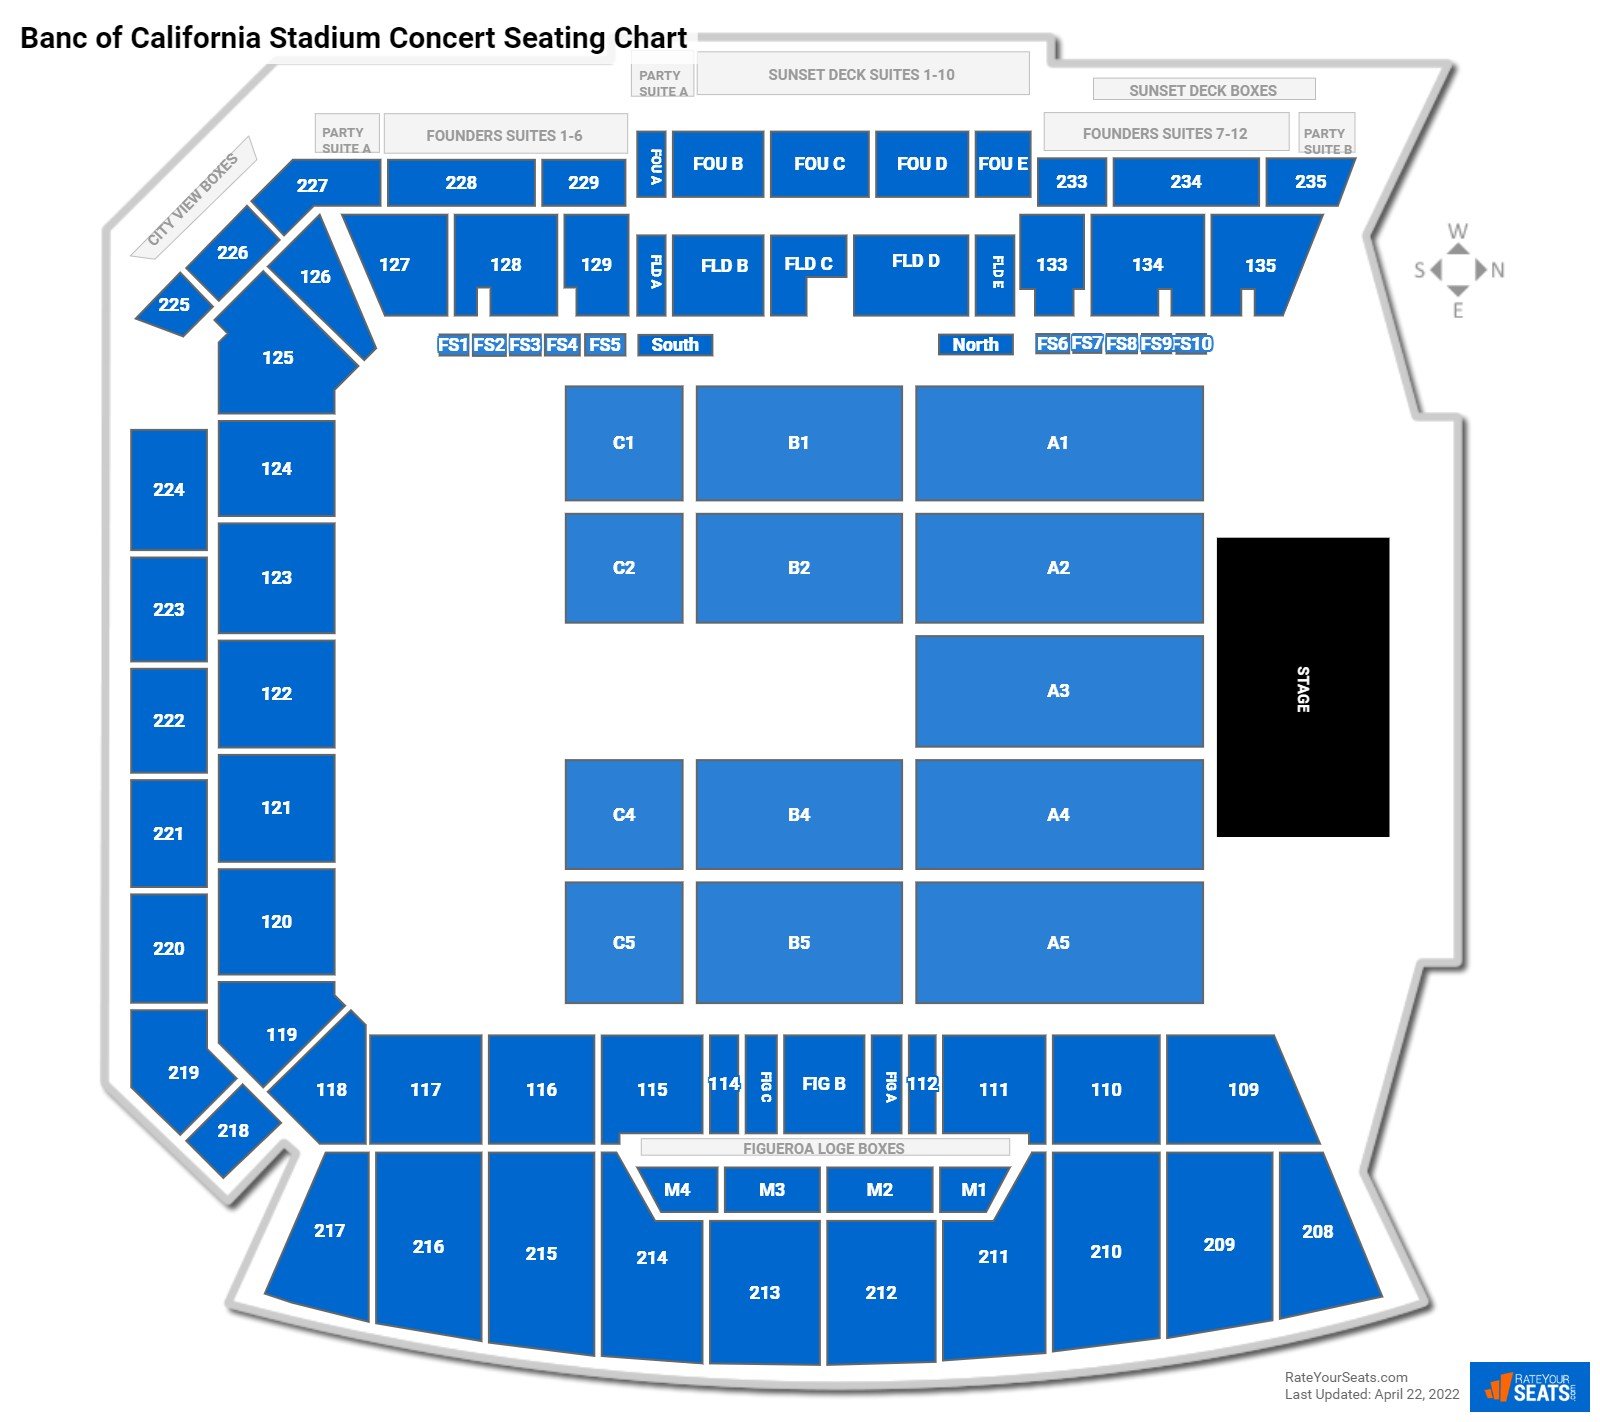 BMO Stadium Concert Seating Chart